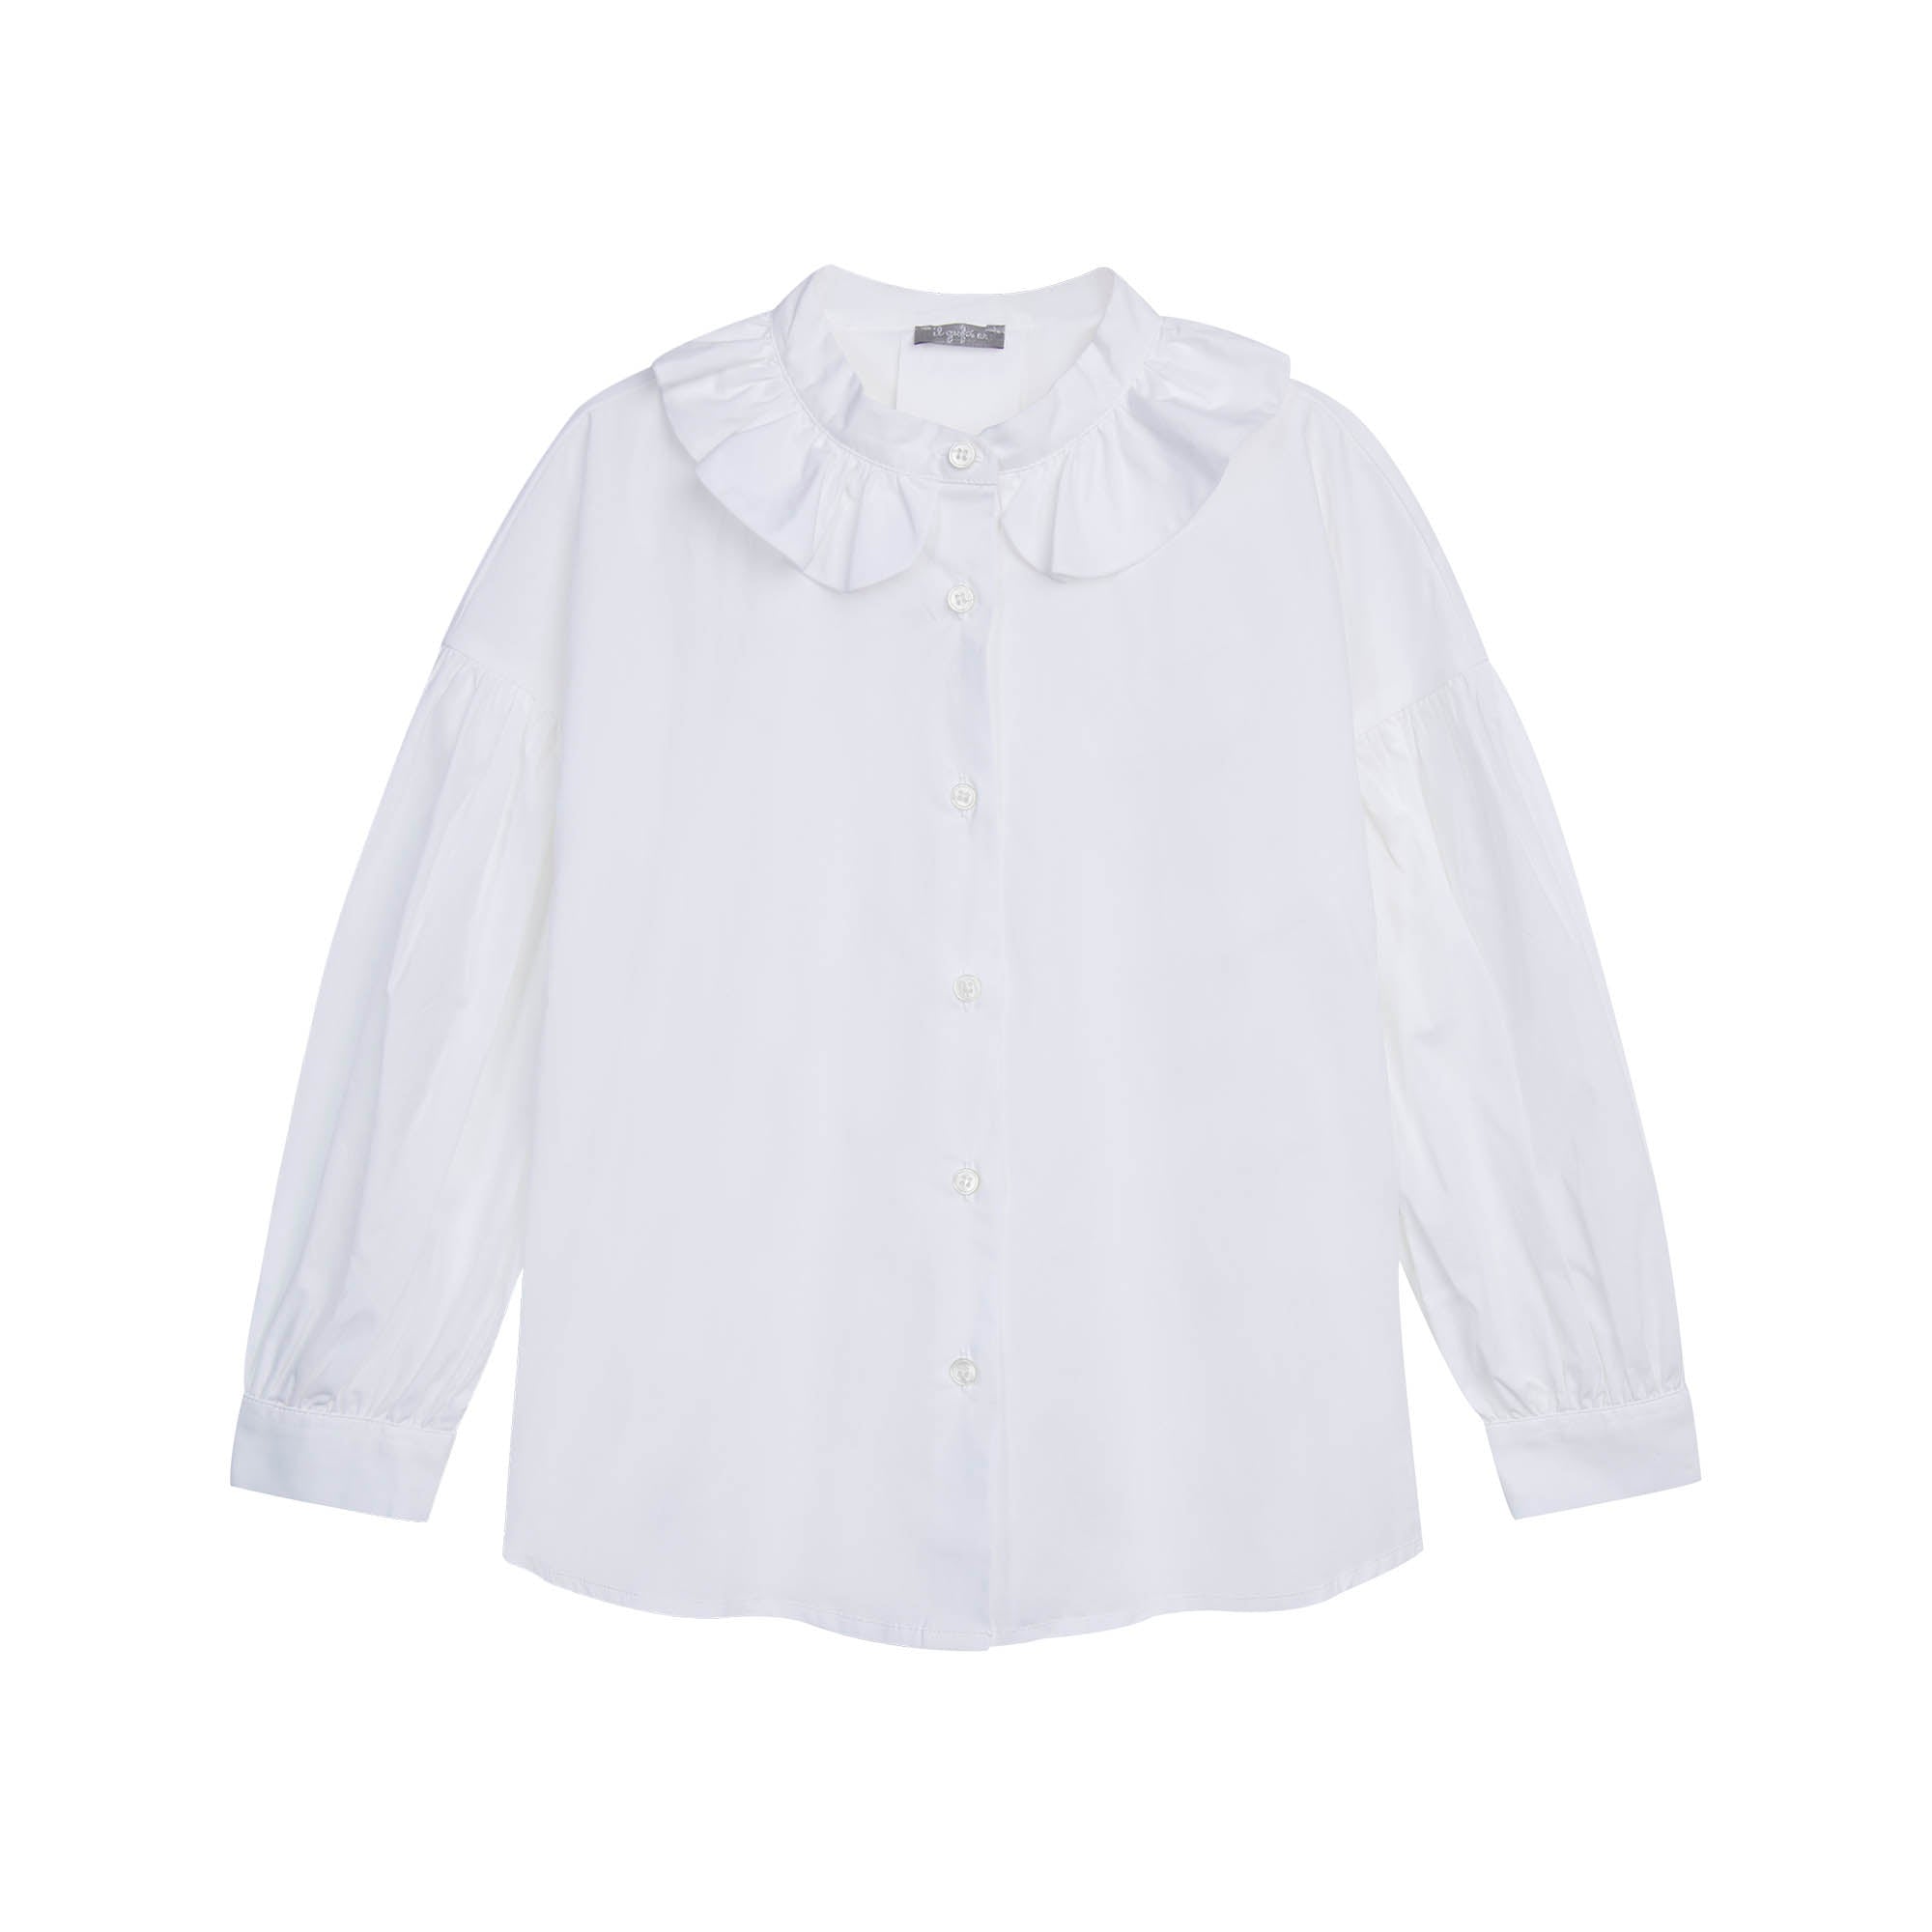 Girls White Ruffle Cotton Shirt